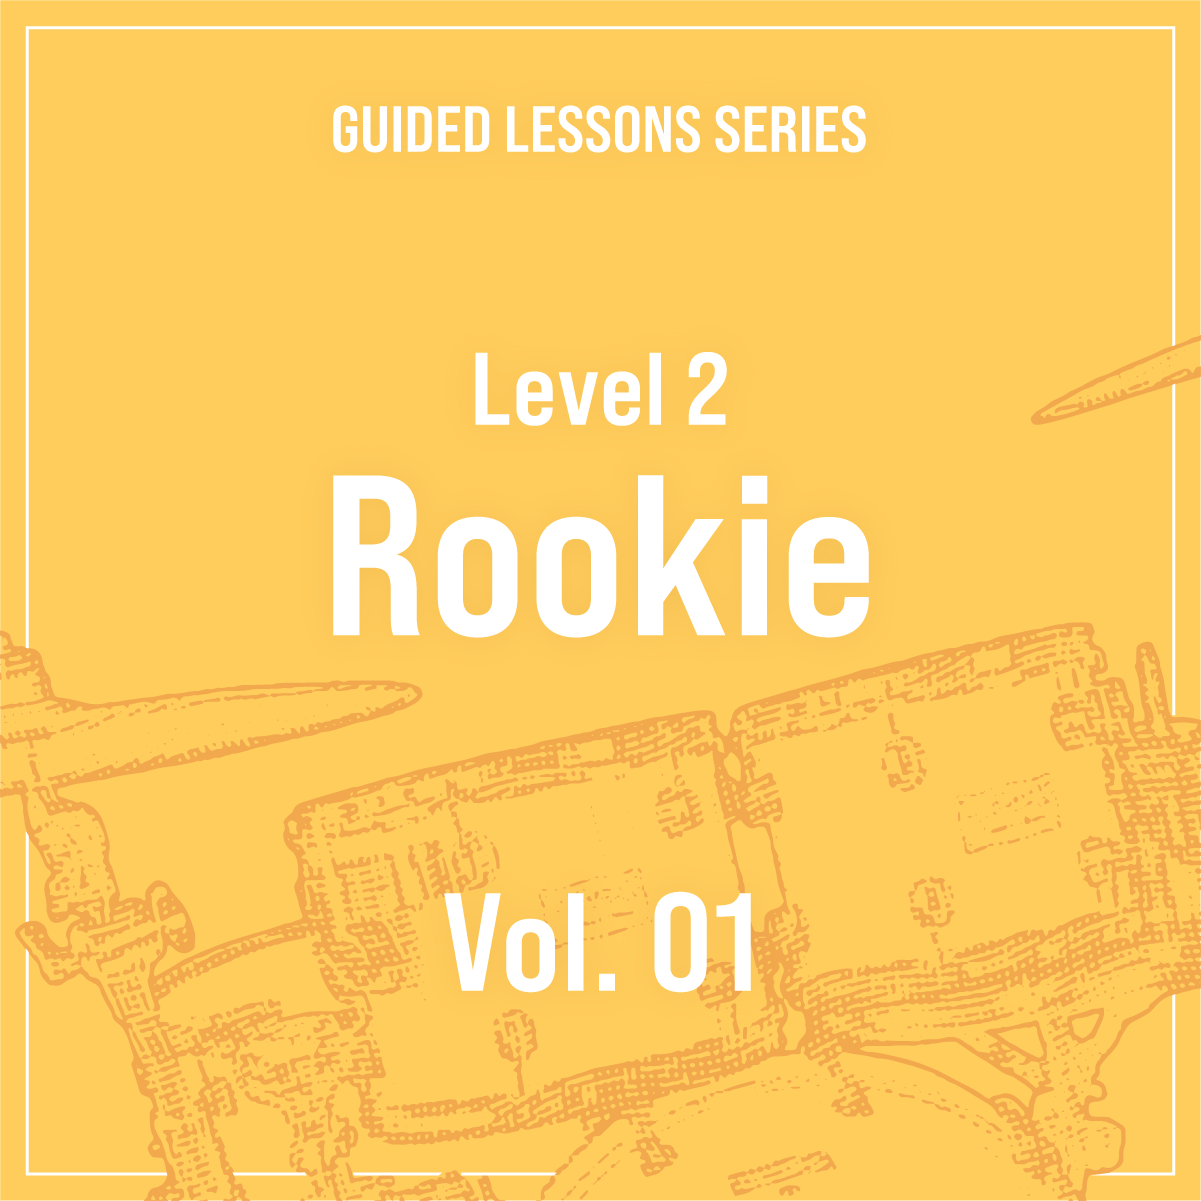 Rookie Vol. 01